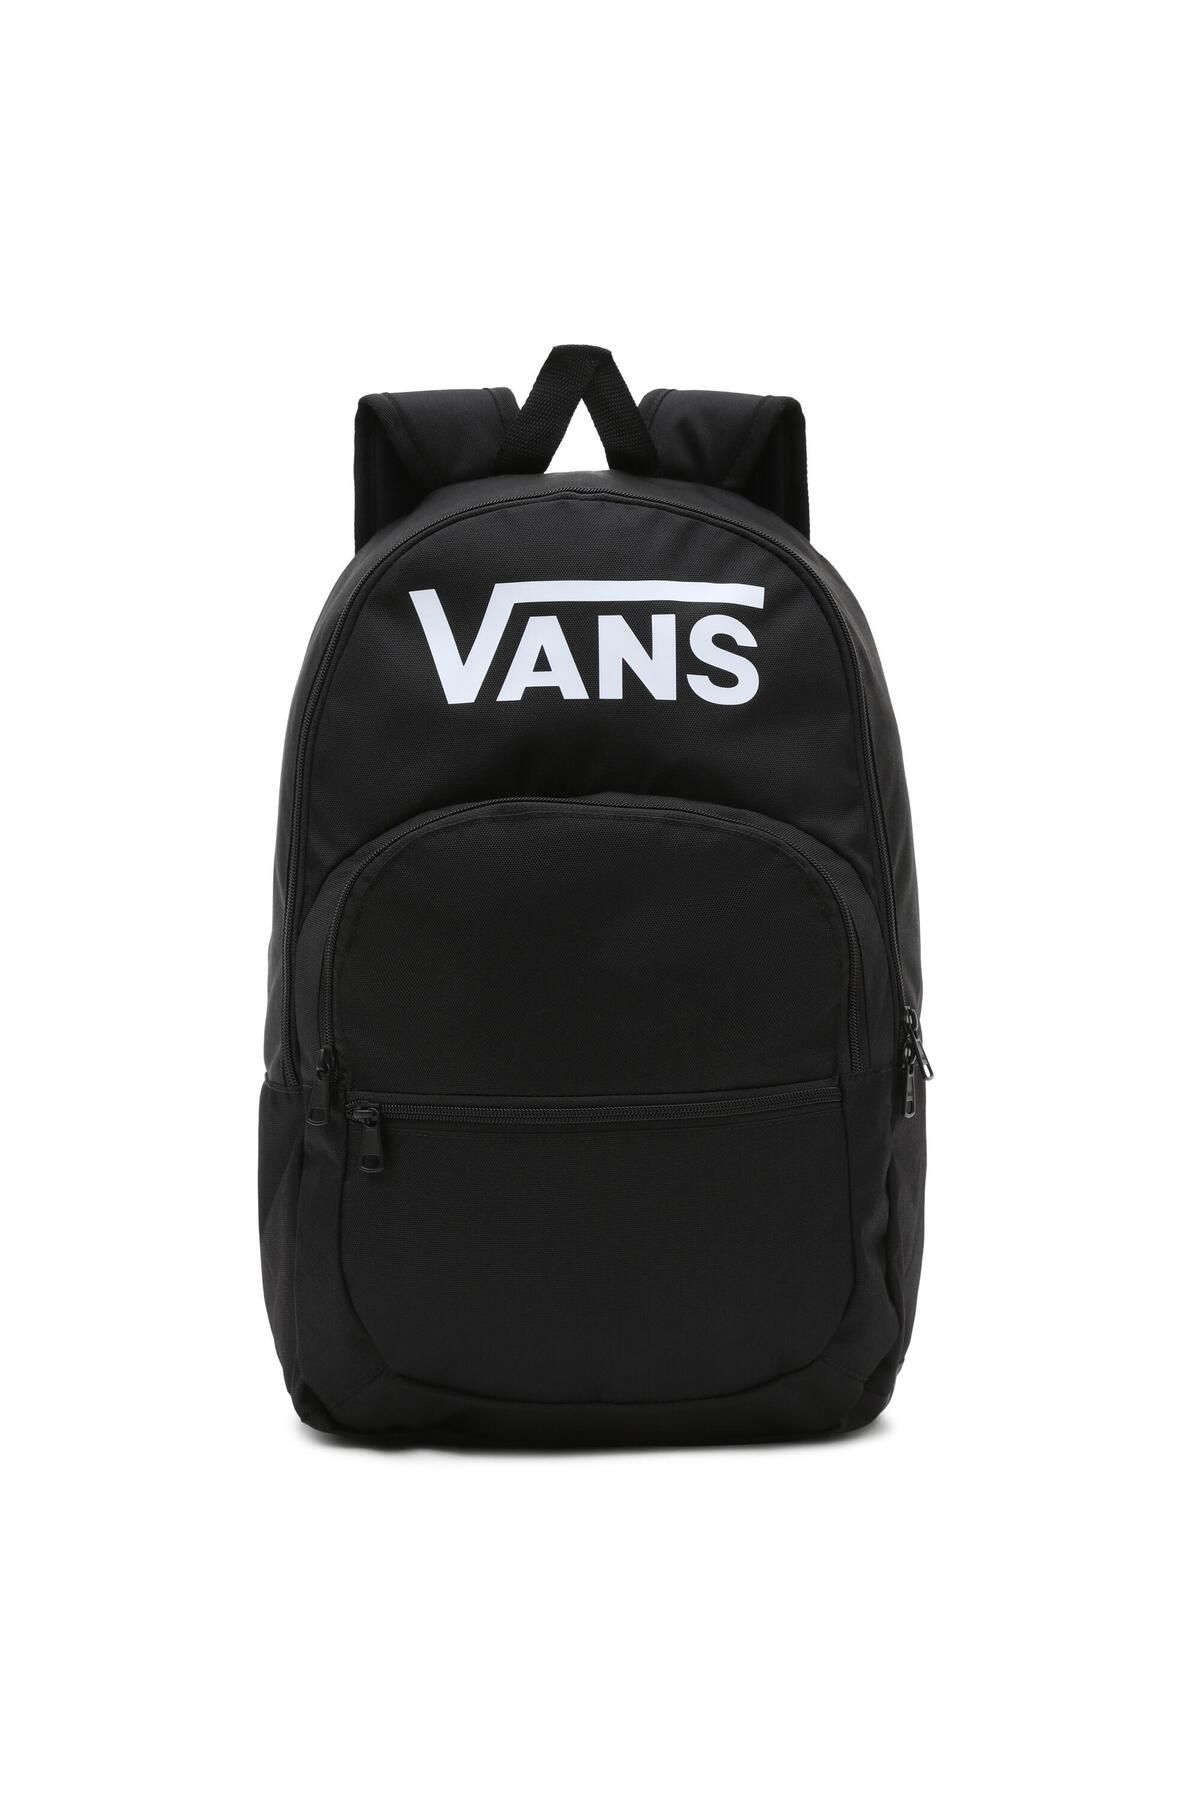 Vans Ranged 2 Backpack-B VN0A7UFNBKA1